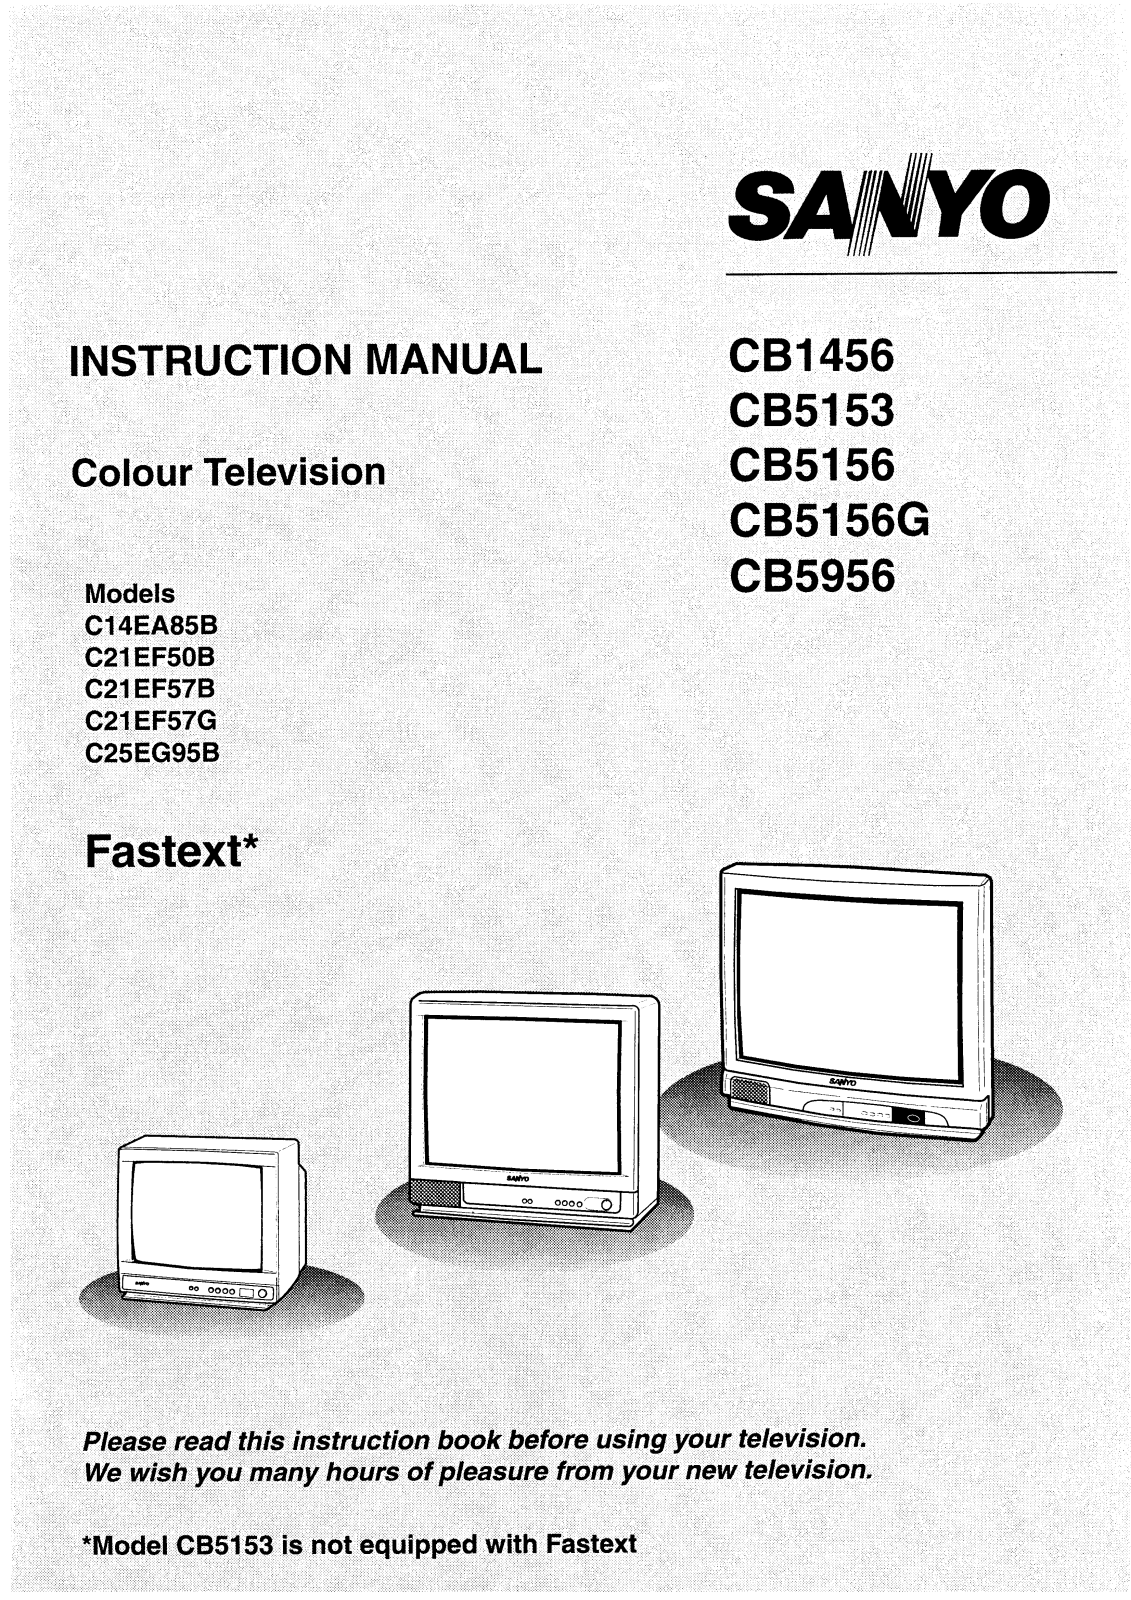 Sanyo CB1456, CB5153, CB5156, CB5156G, CB5956 Instruction Manual